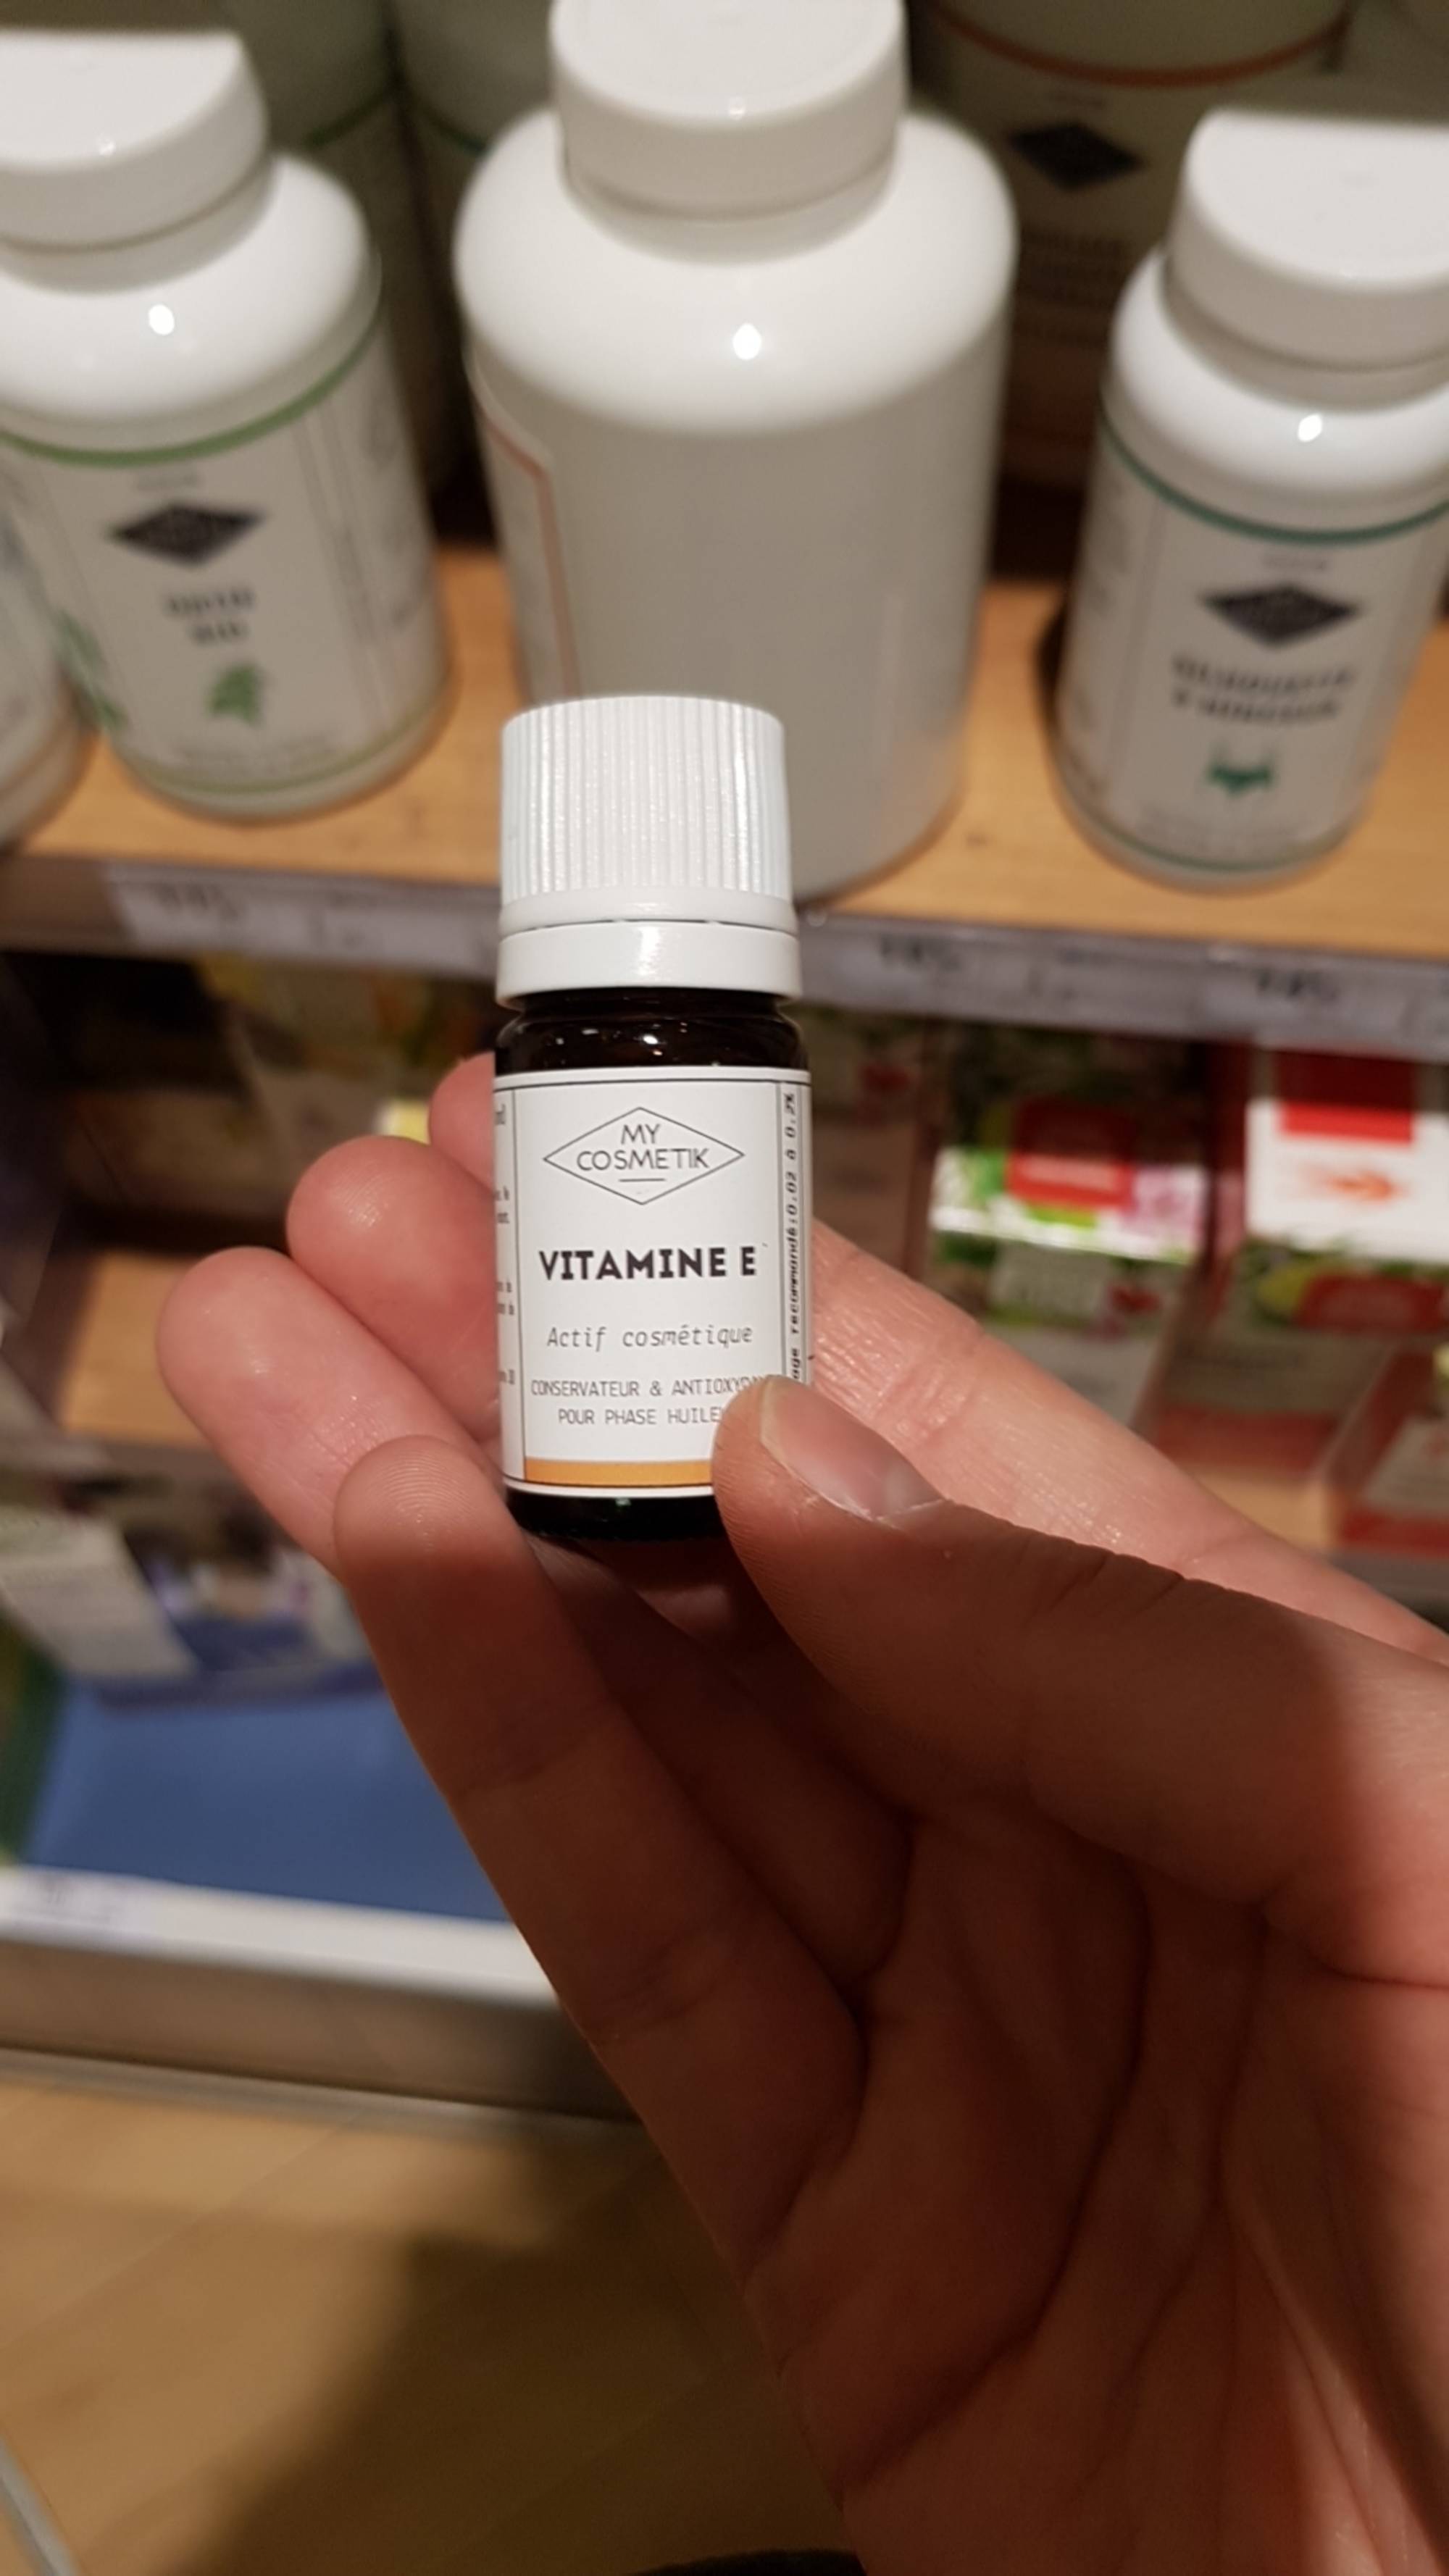 MY COSMETIK - Vitamine E - Actif cosmétique